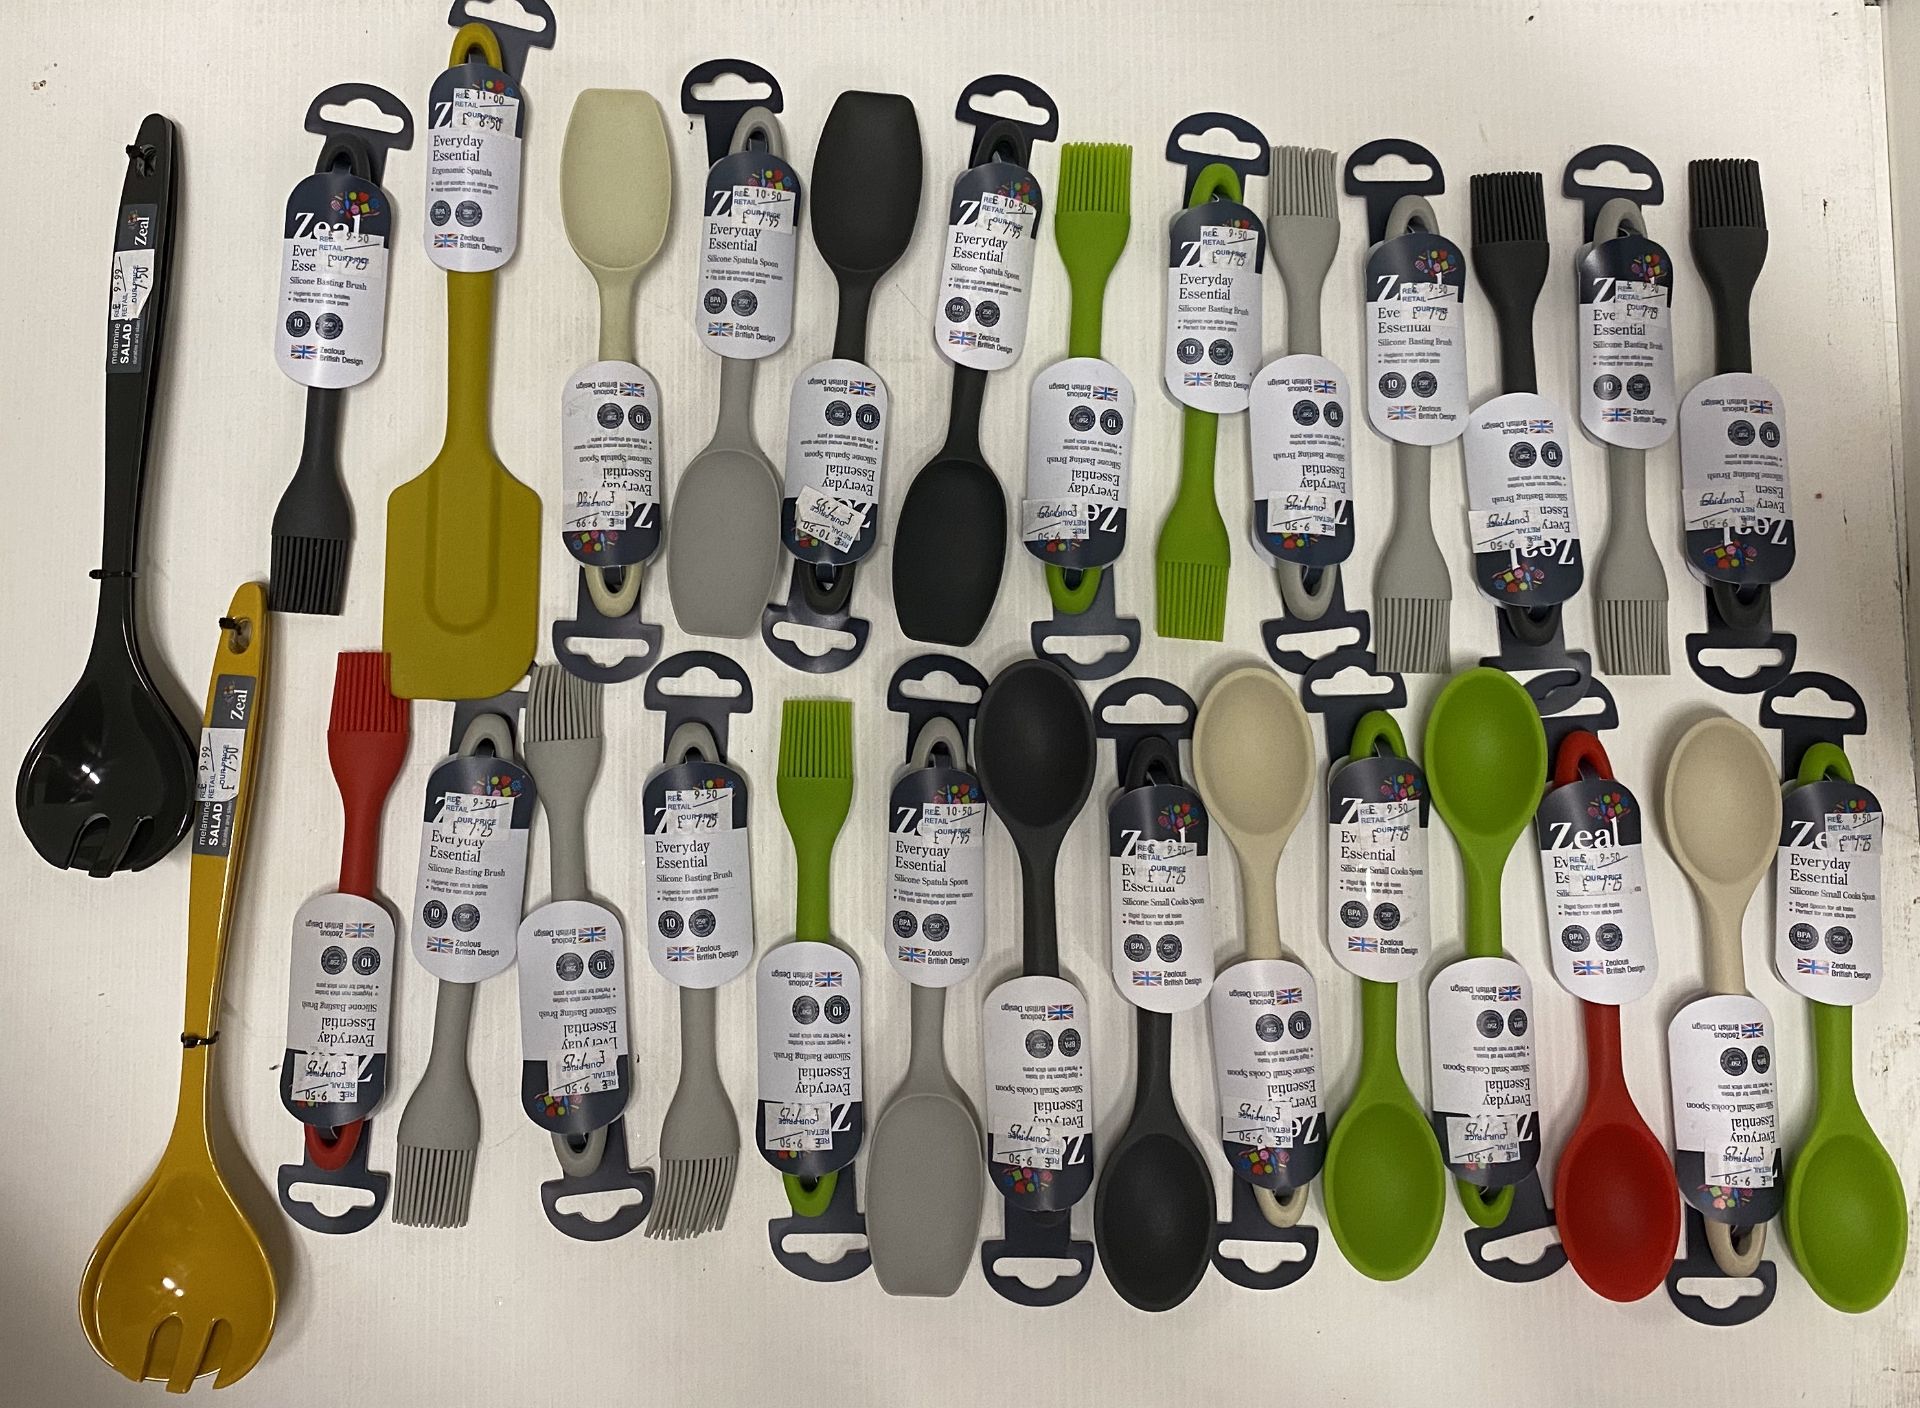 30 x Zeal kitchen accessories - ergonomic spatulas (RRP £11.00), spatulas (RRP £7.